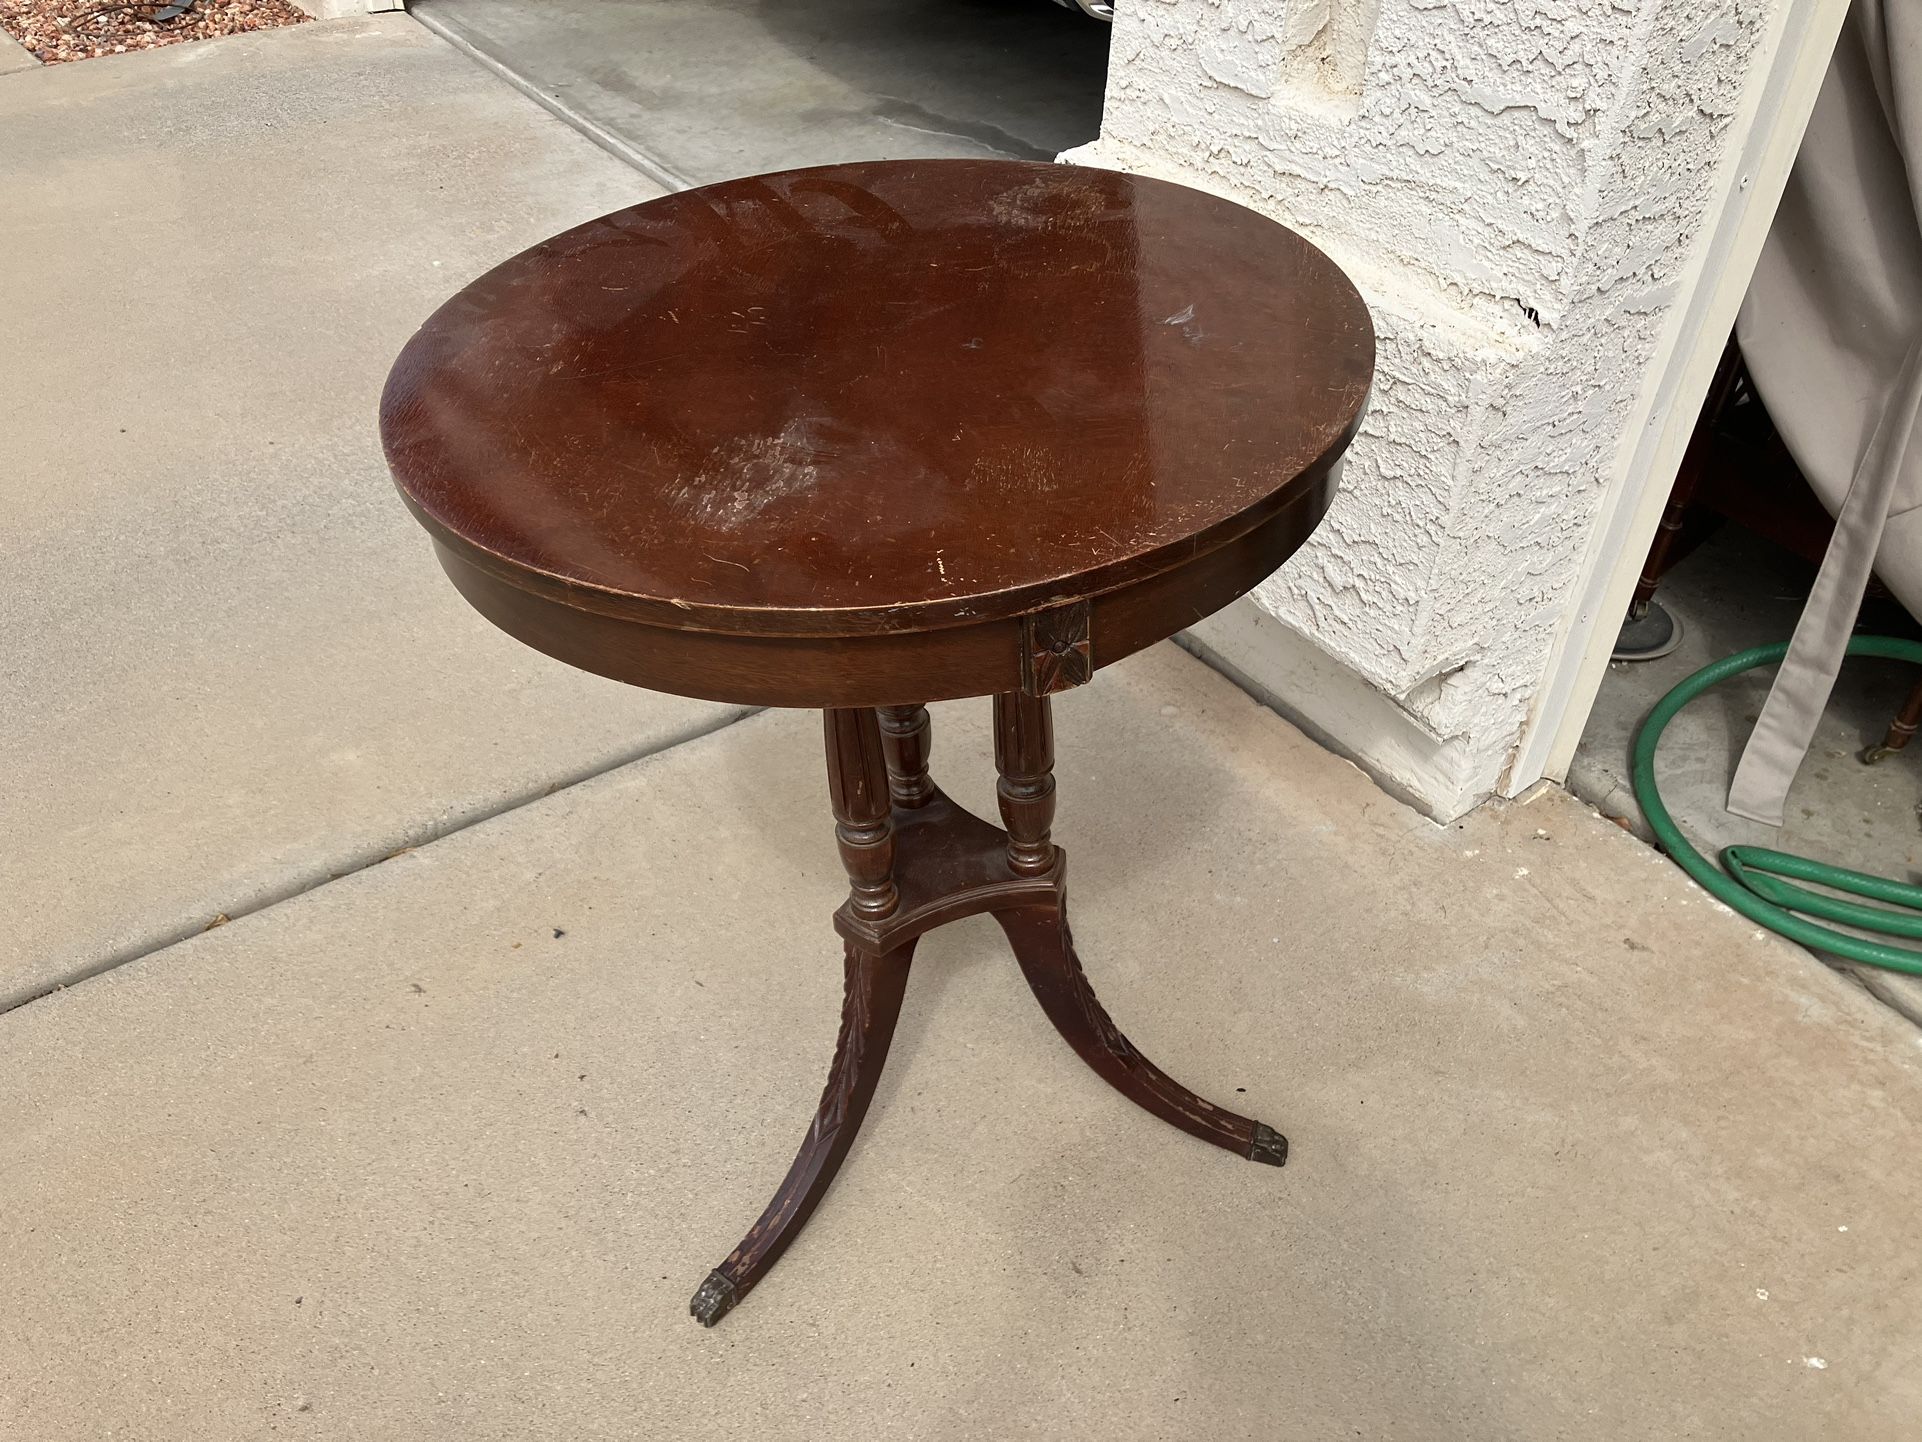 Antique Lamp Table